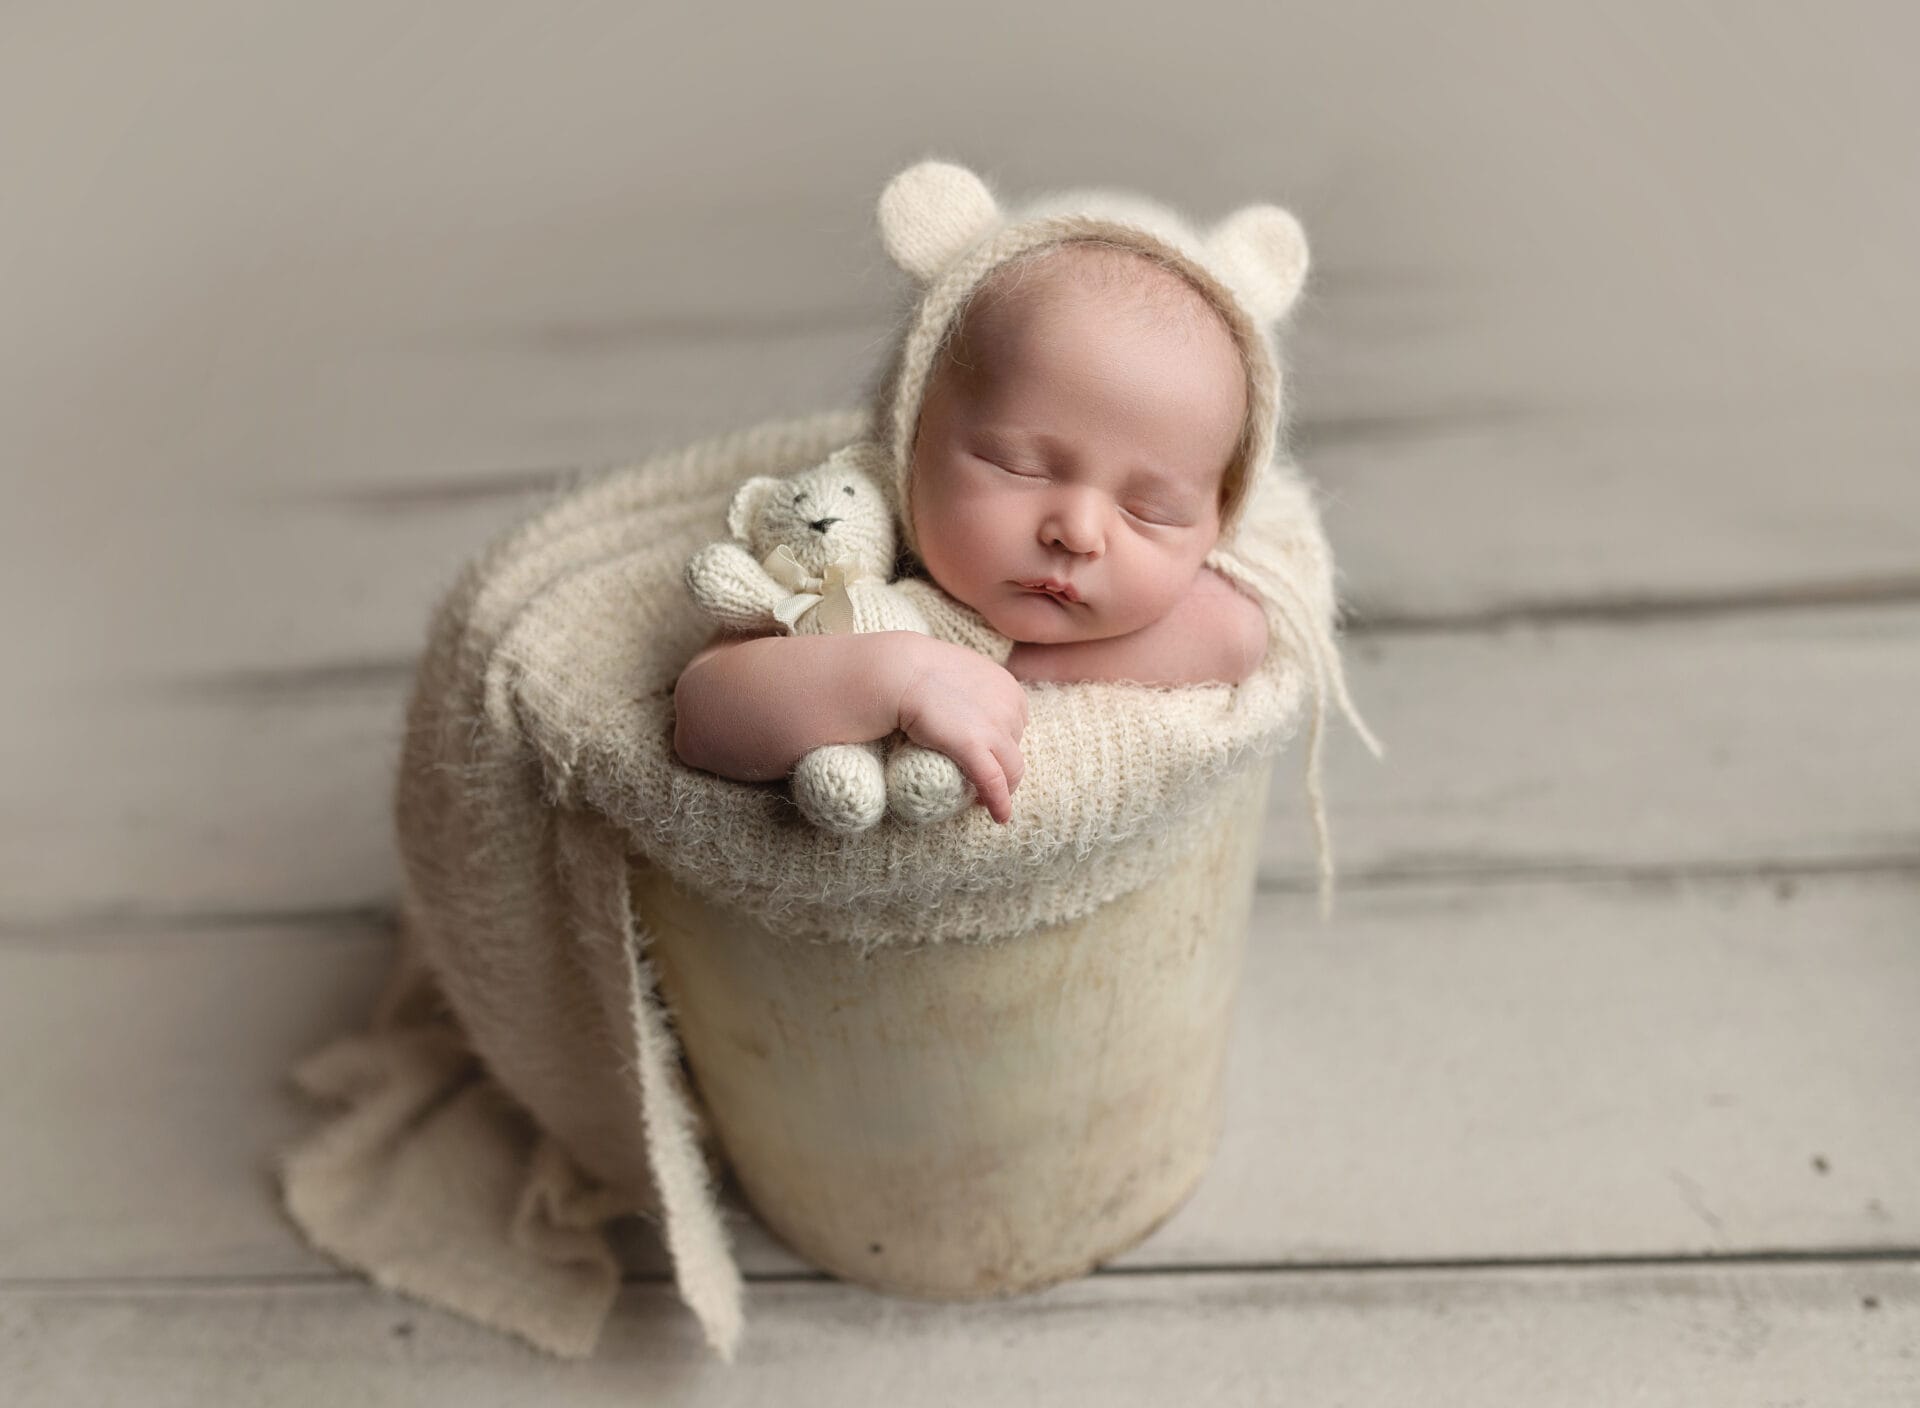 A newborn baby in the studio is wearing a bear bonnet in a bucket and cuddling a teddy bear.